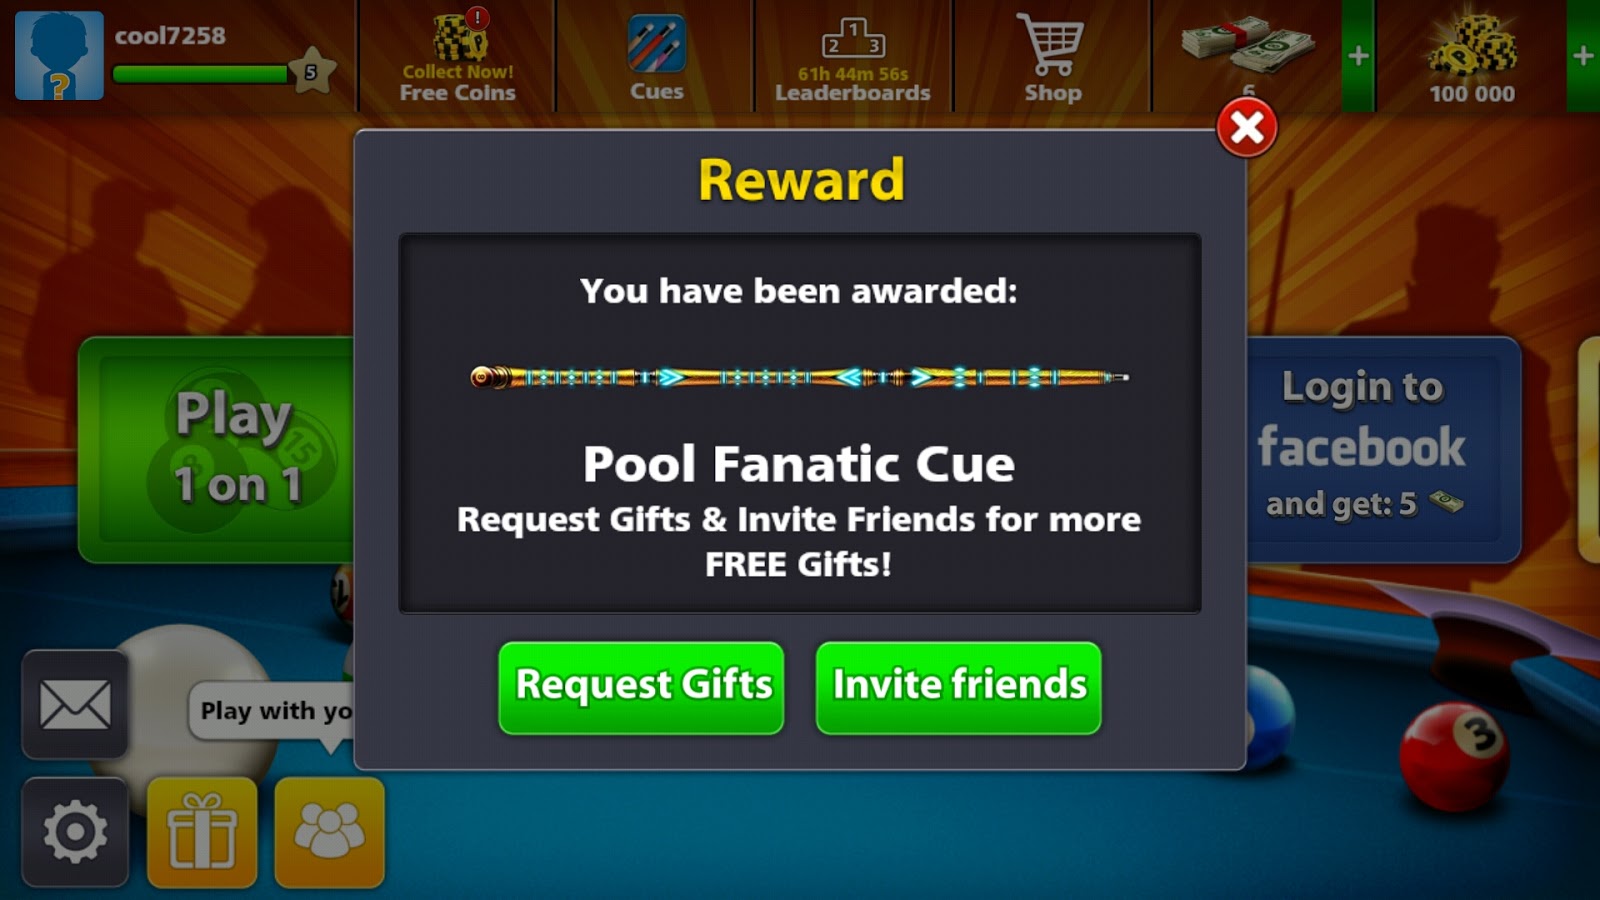 8 Ball Pool Free Pool Fanatic Cue + Some Rewards Coins 7th ... - 